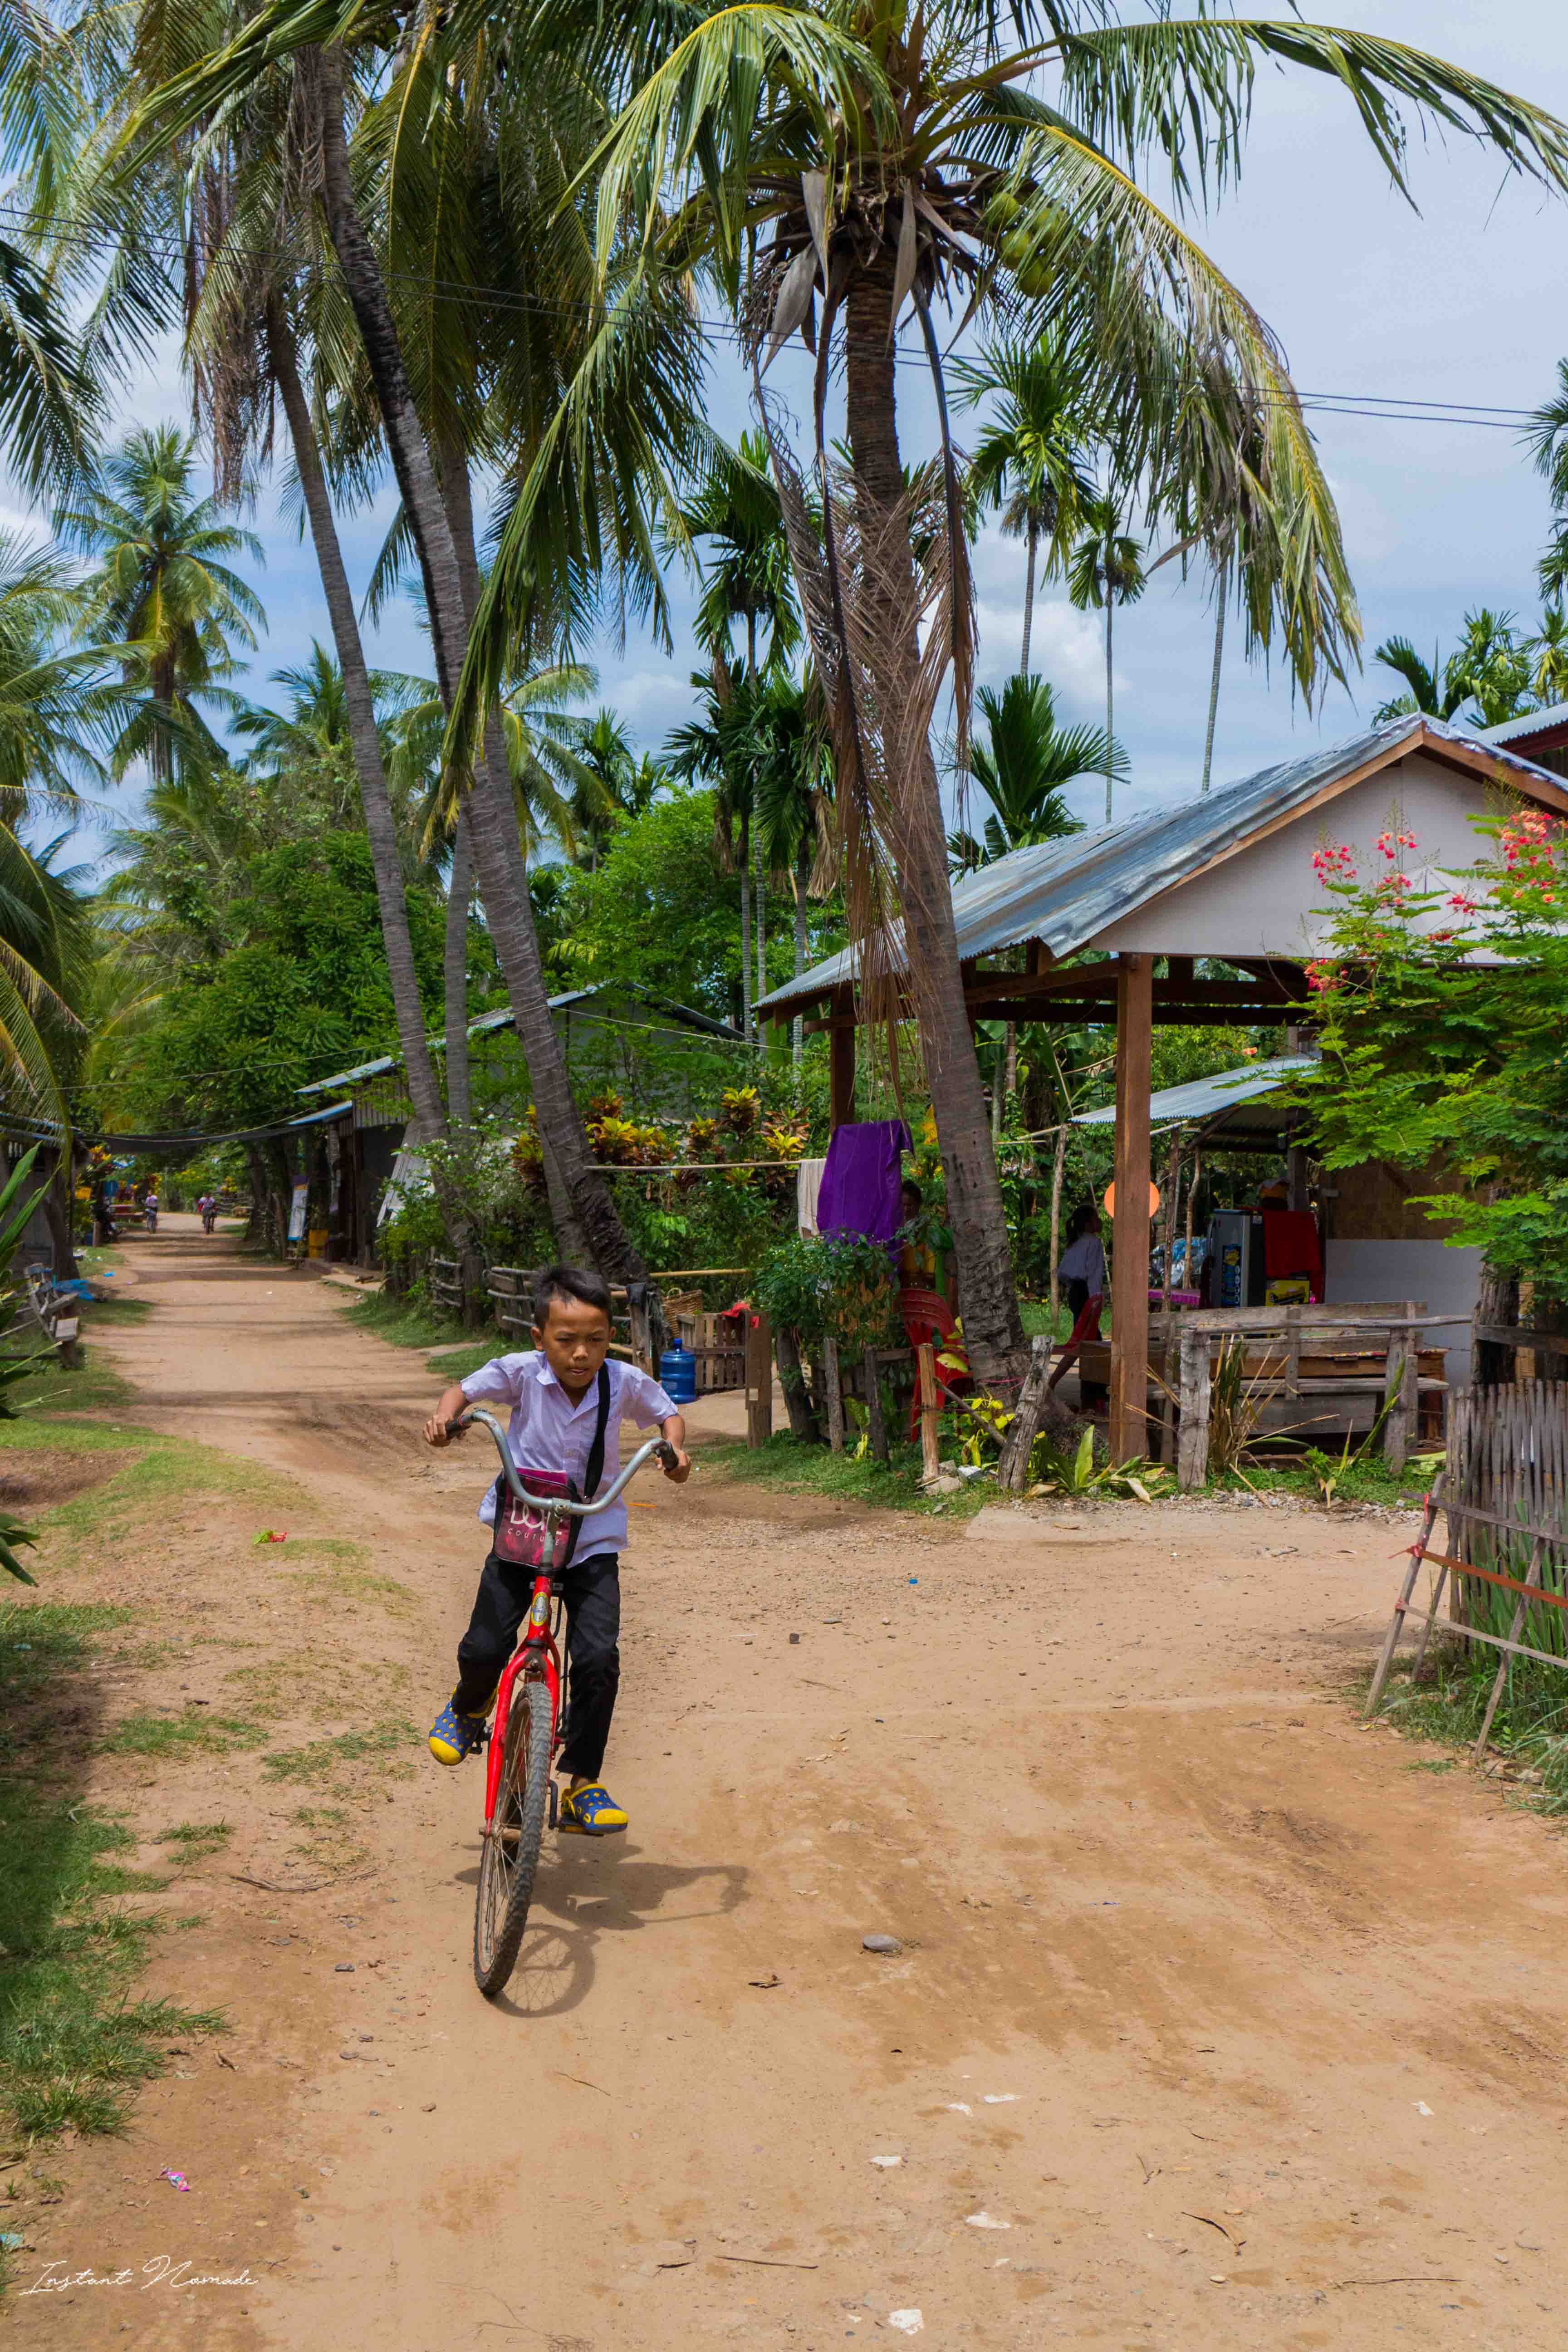 village don Khone laos 4000 iles